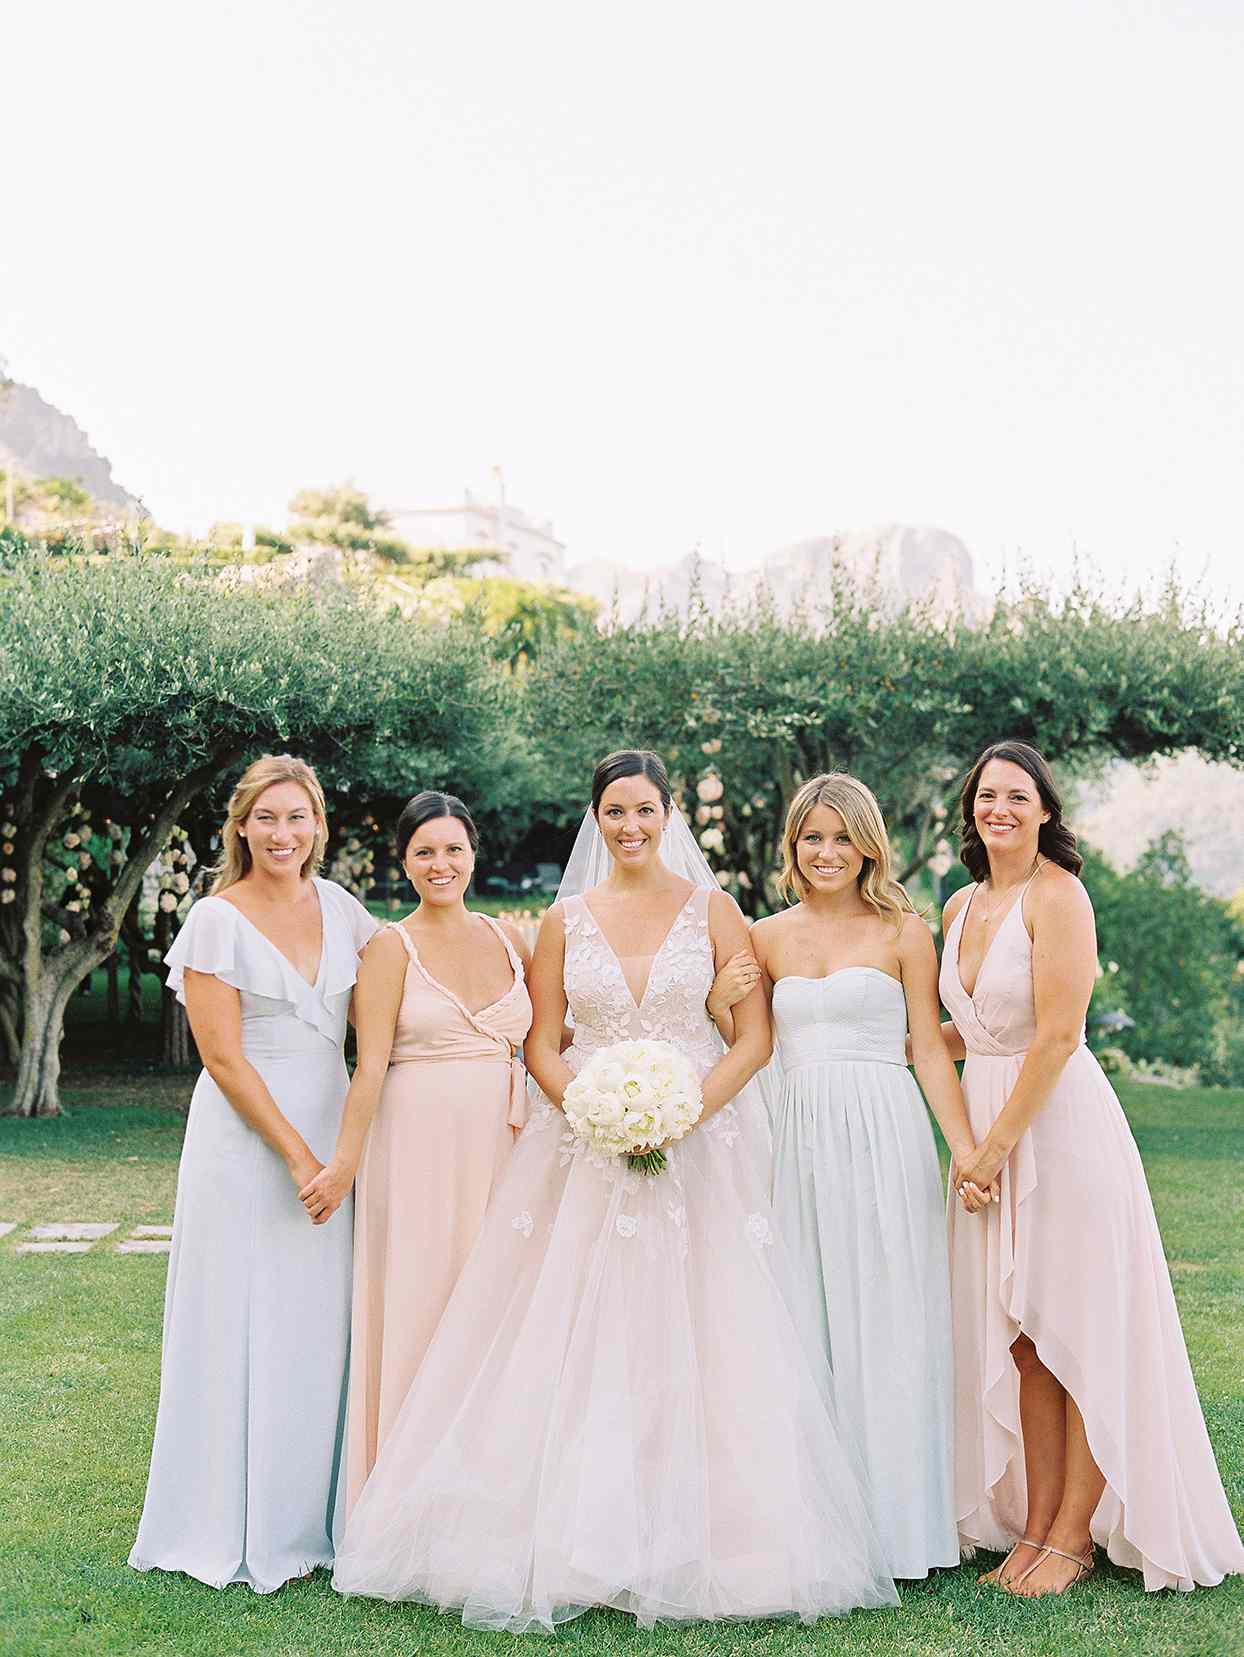 jacqueline david wedding bridesmaids in pastels